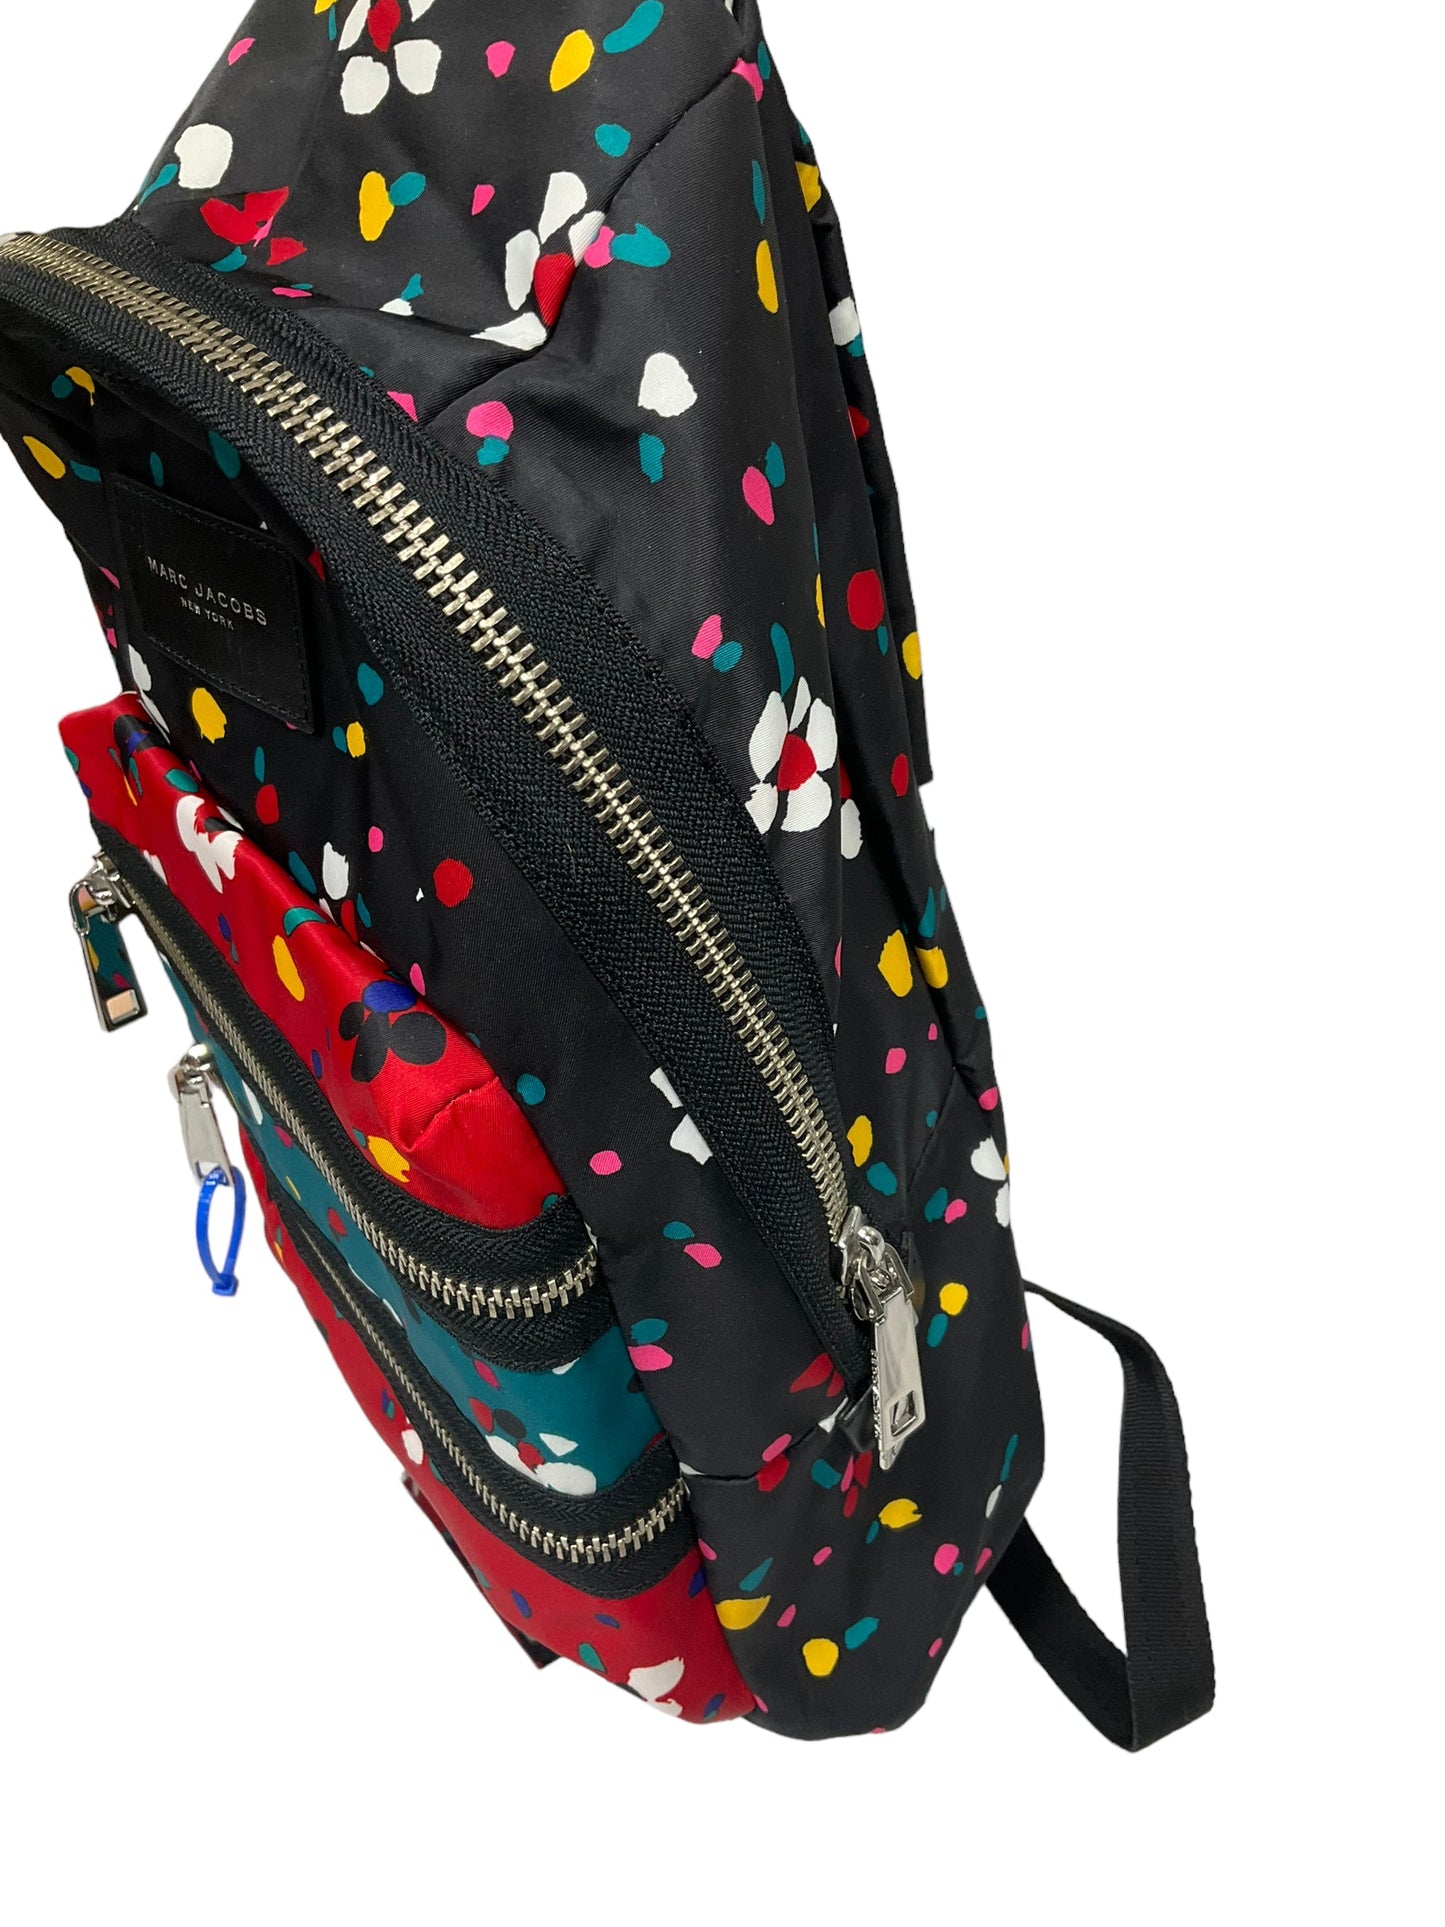 Backpack Designer By Marc Jacobs  Size: Large